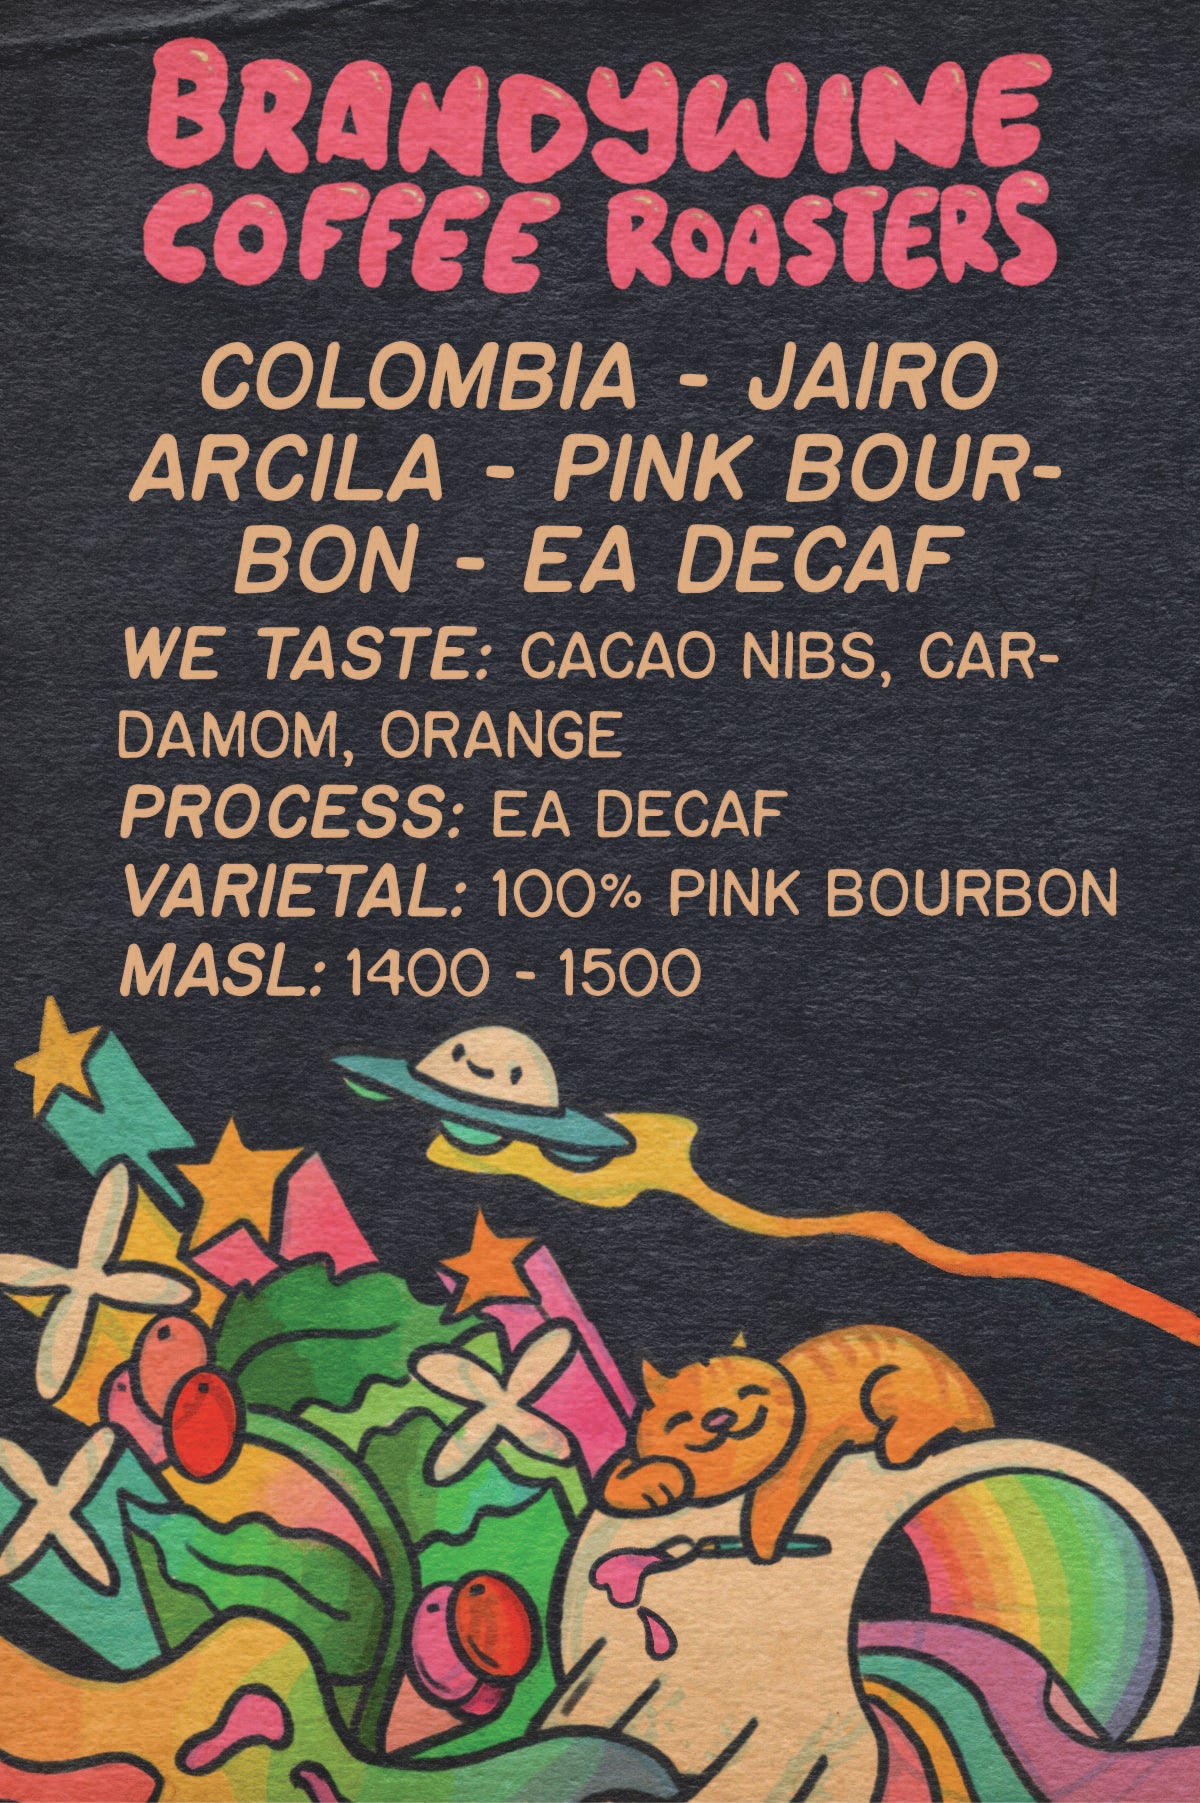 Colombia - Jairo Arcila - Pink Bourbon - EA Decaf